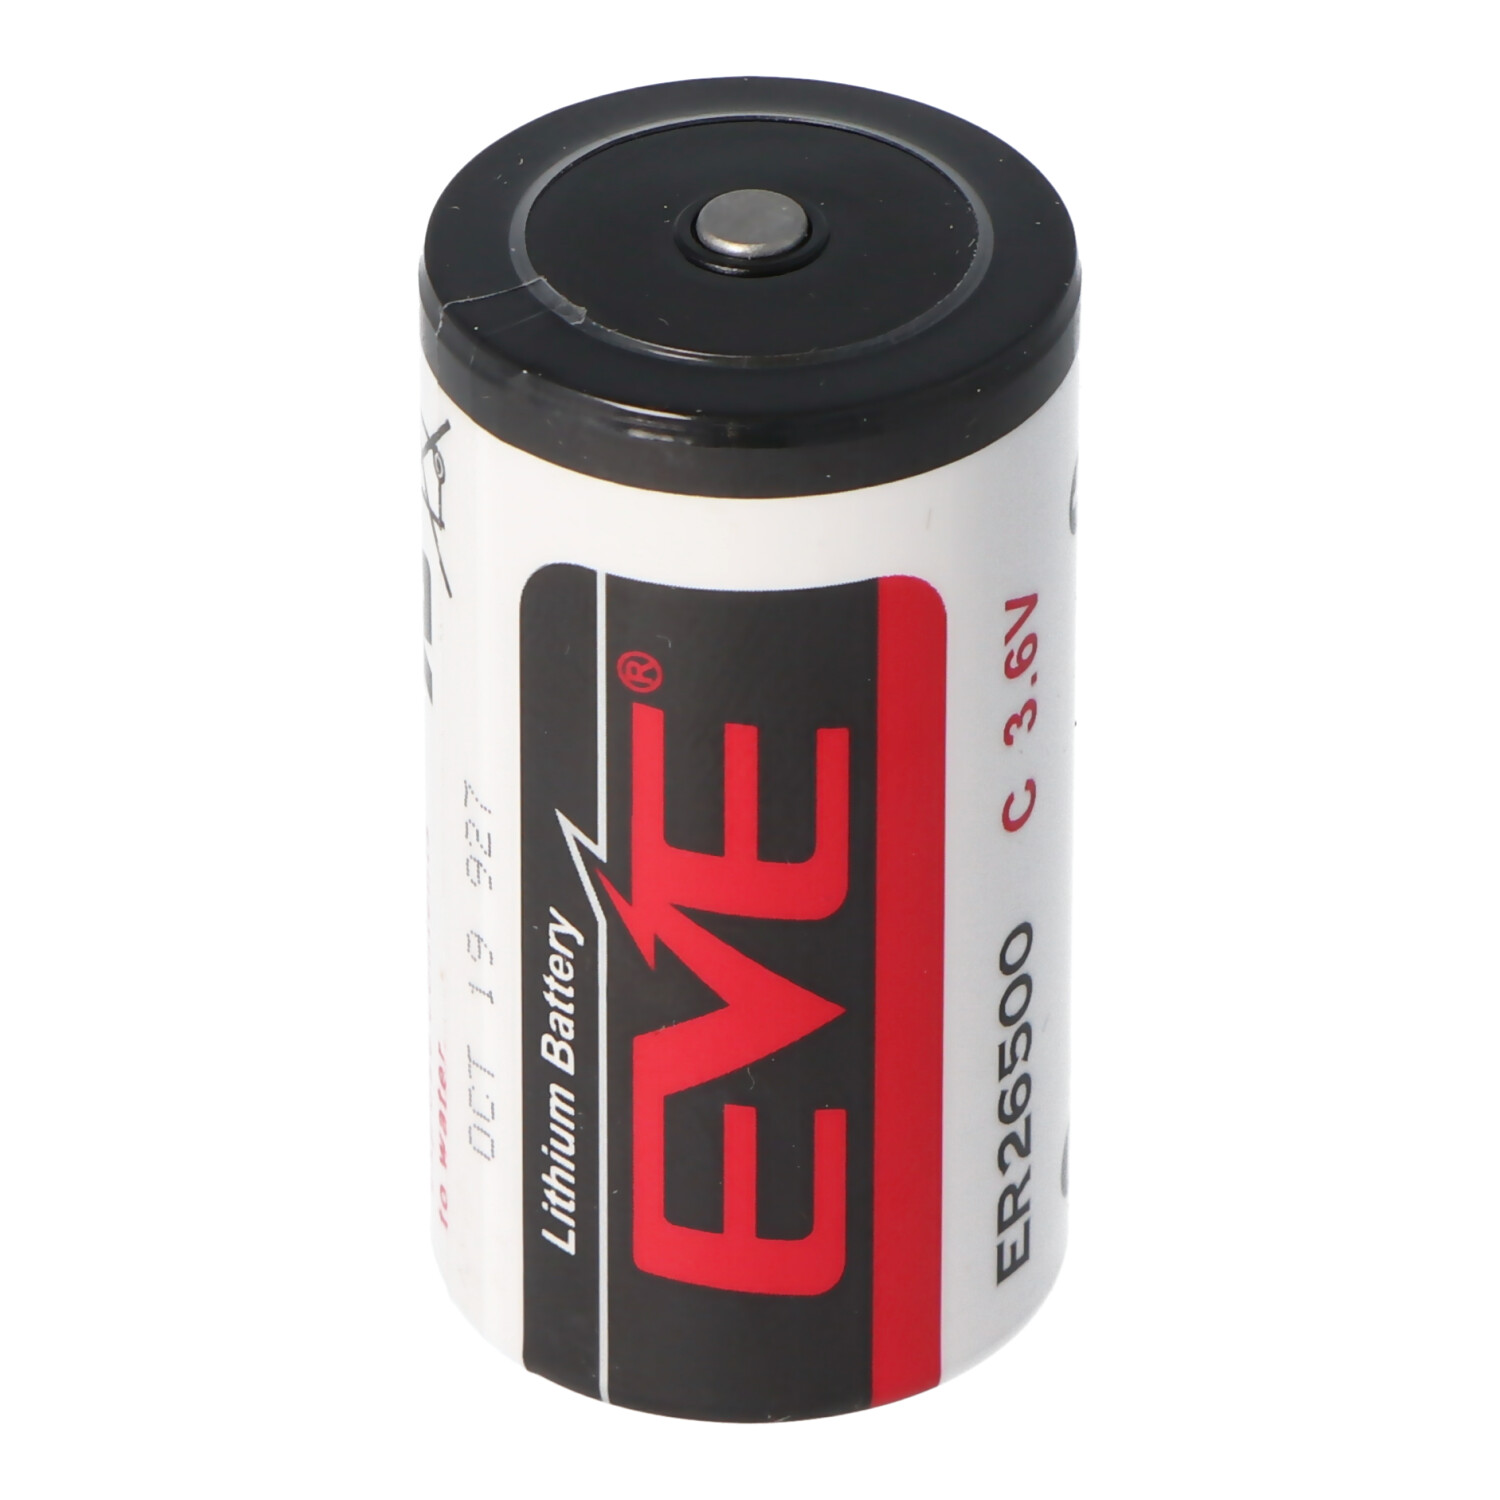 ER26500 Lithium Batterie C Size Bobbin ER 26500, 3,6 Volt 8500mAh mit schmalem Pluspol min. 0,3mm, max. 0,5mm